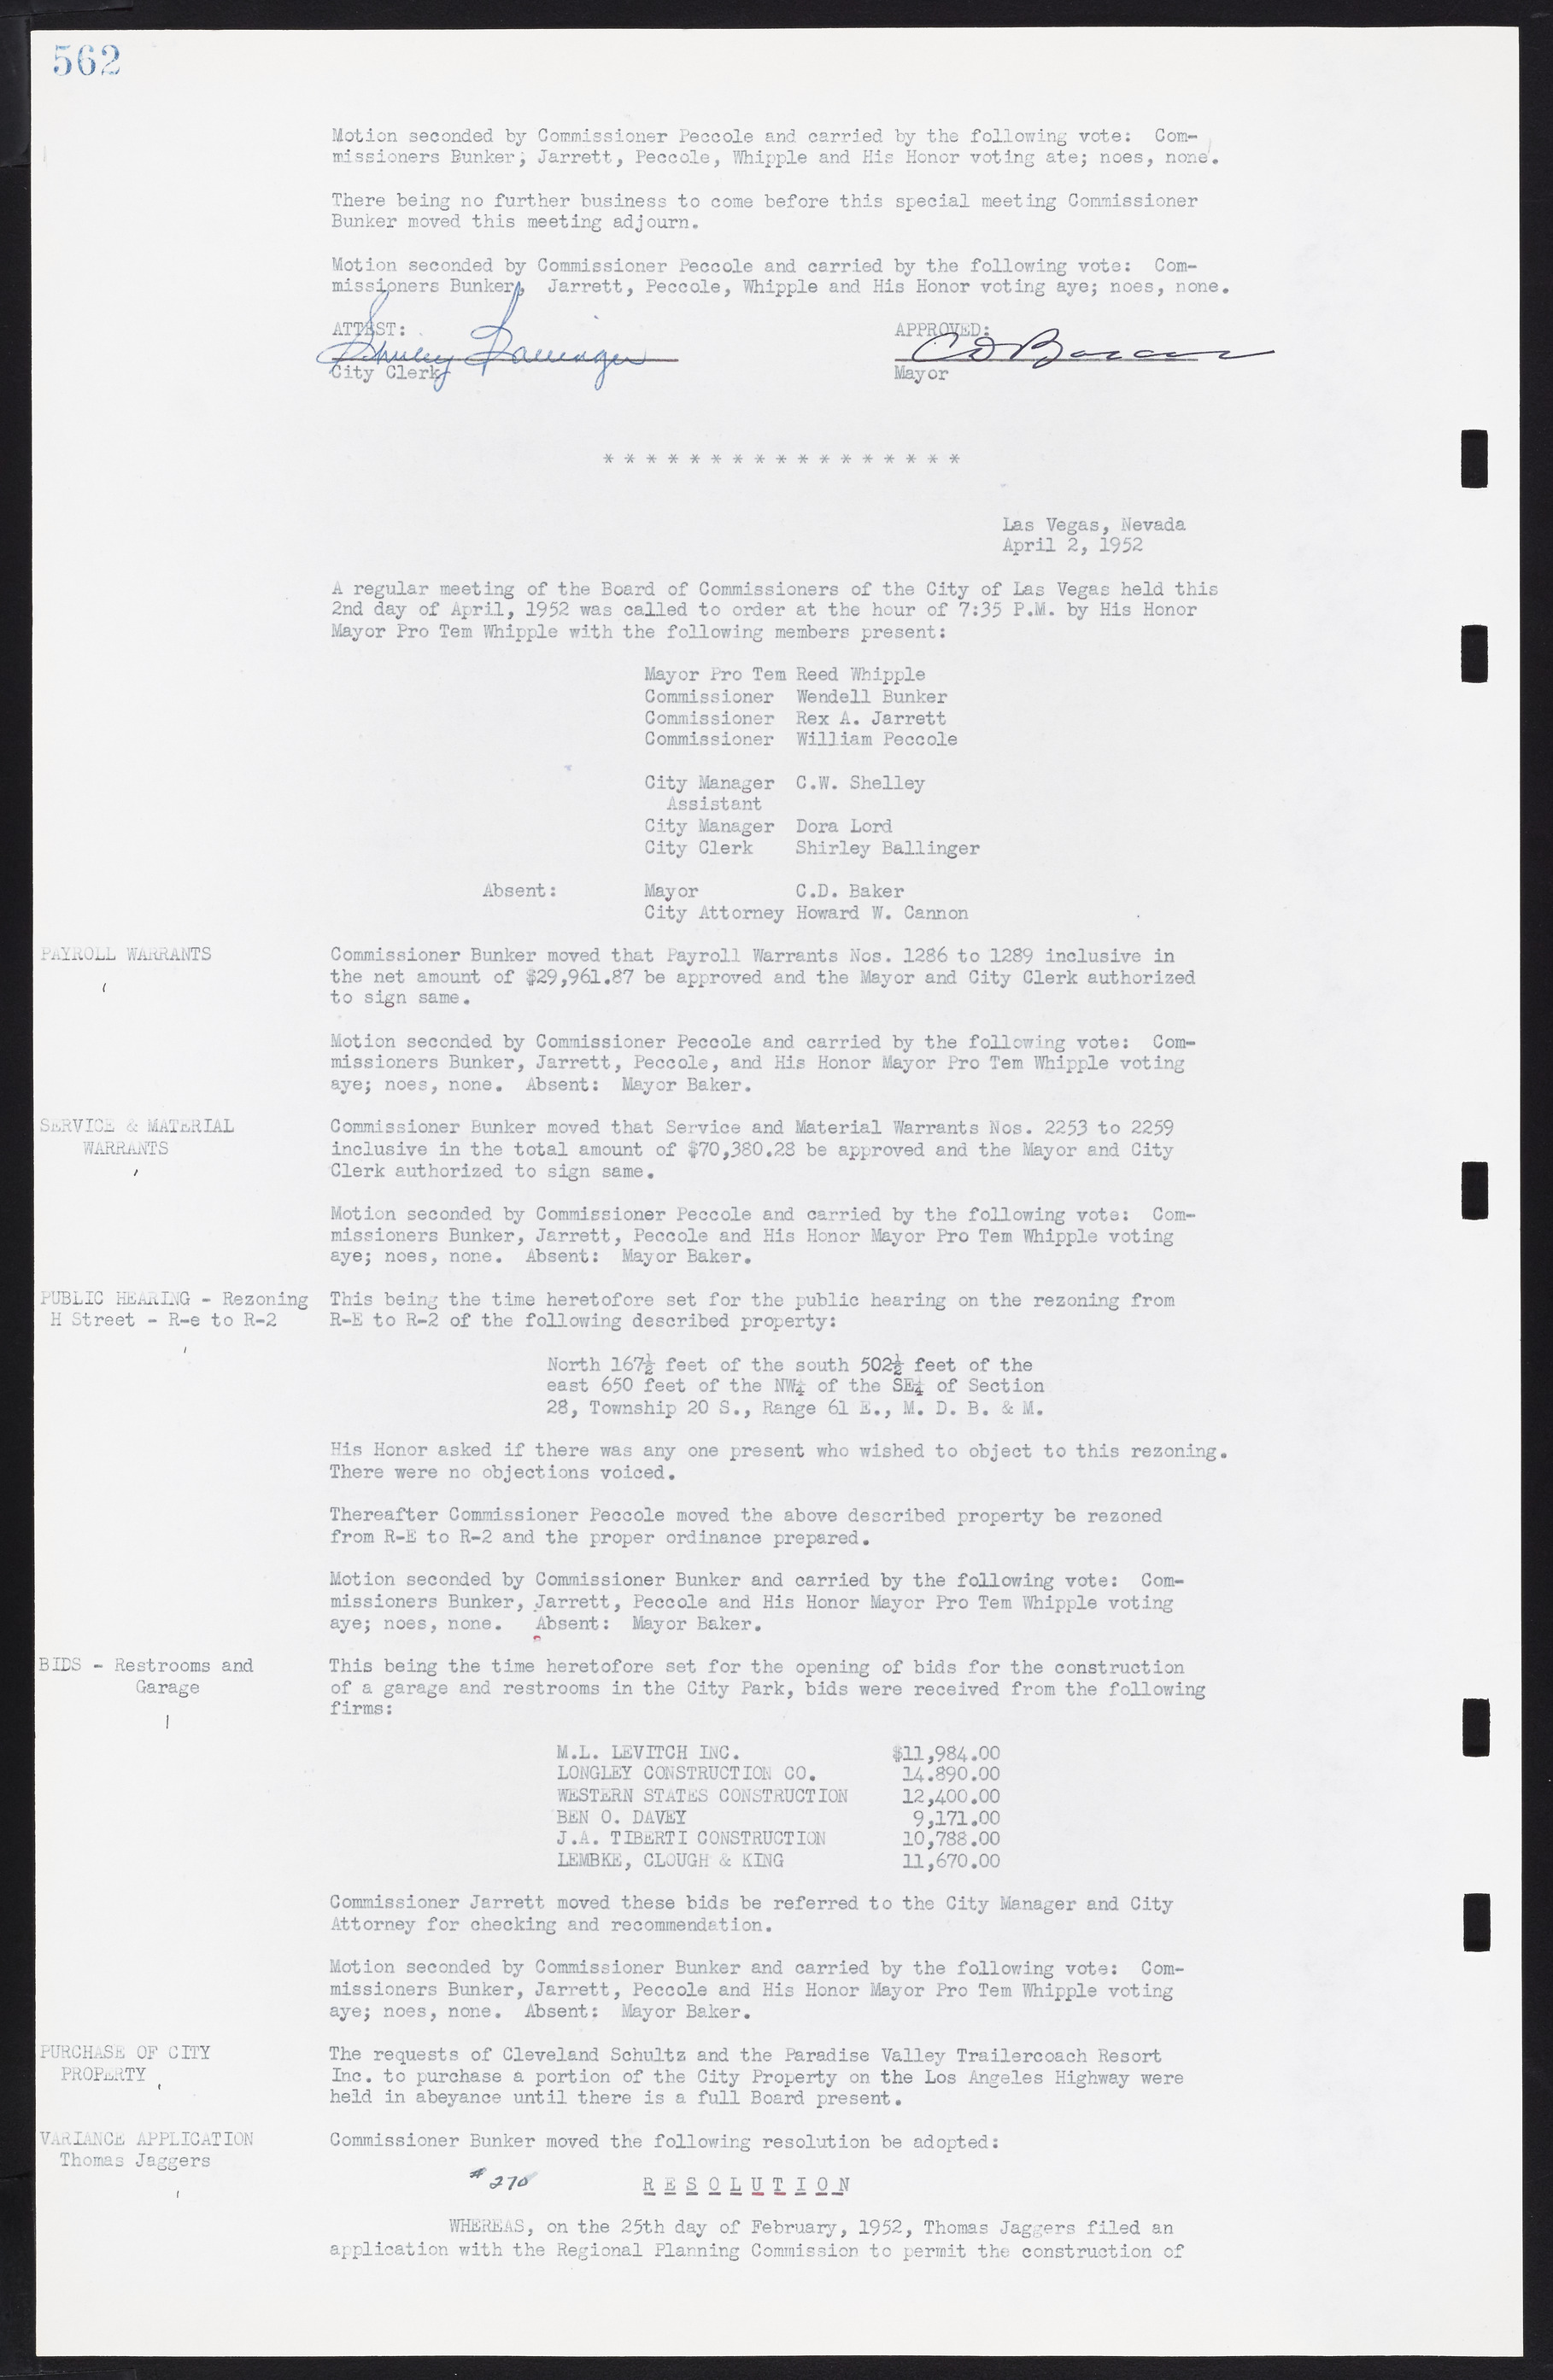 Las Vegas City Commission Minutes, November 7, 1949 to May 21, 1952, lvc000007-580